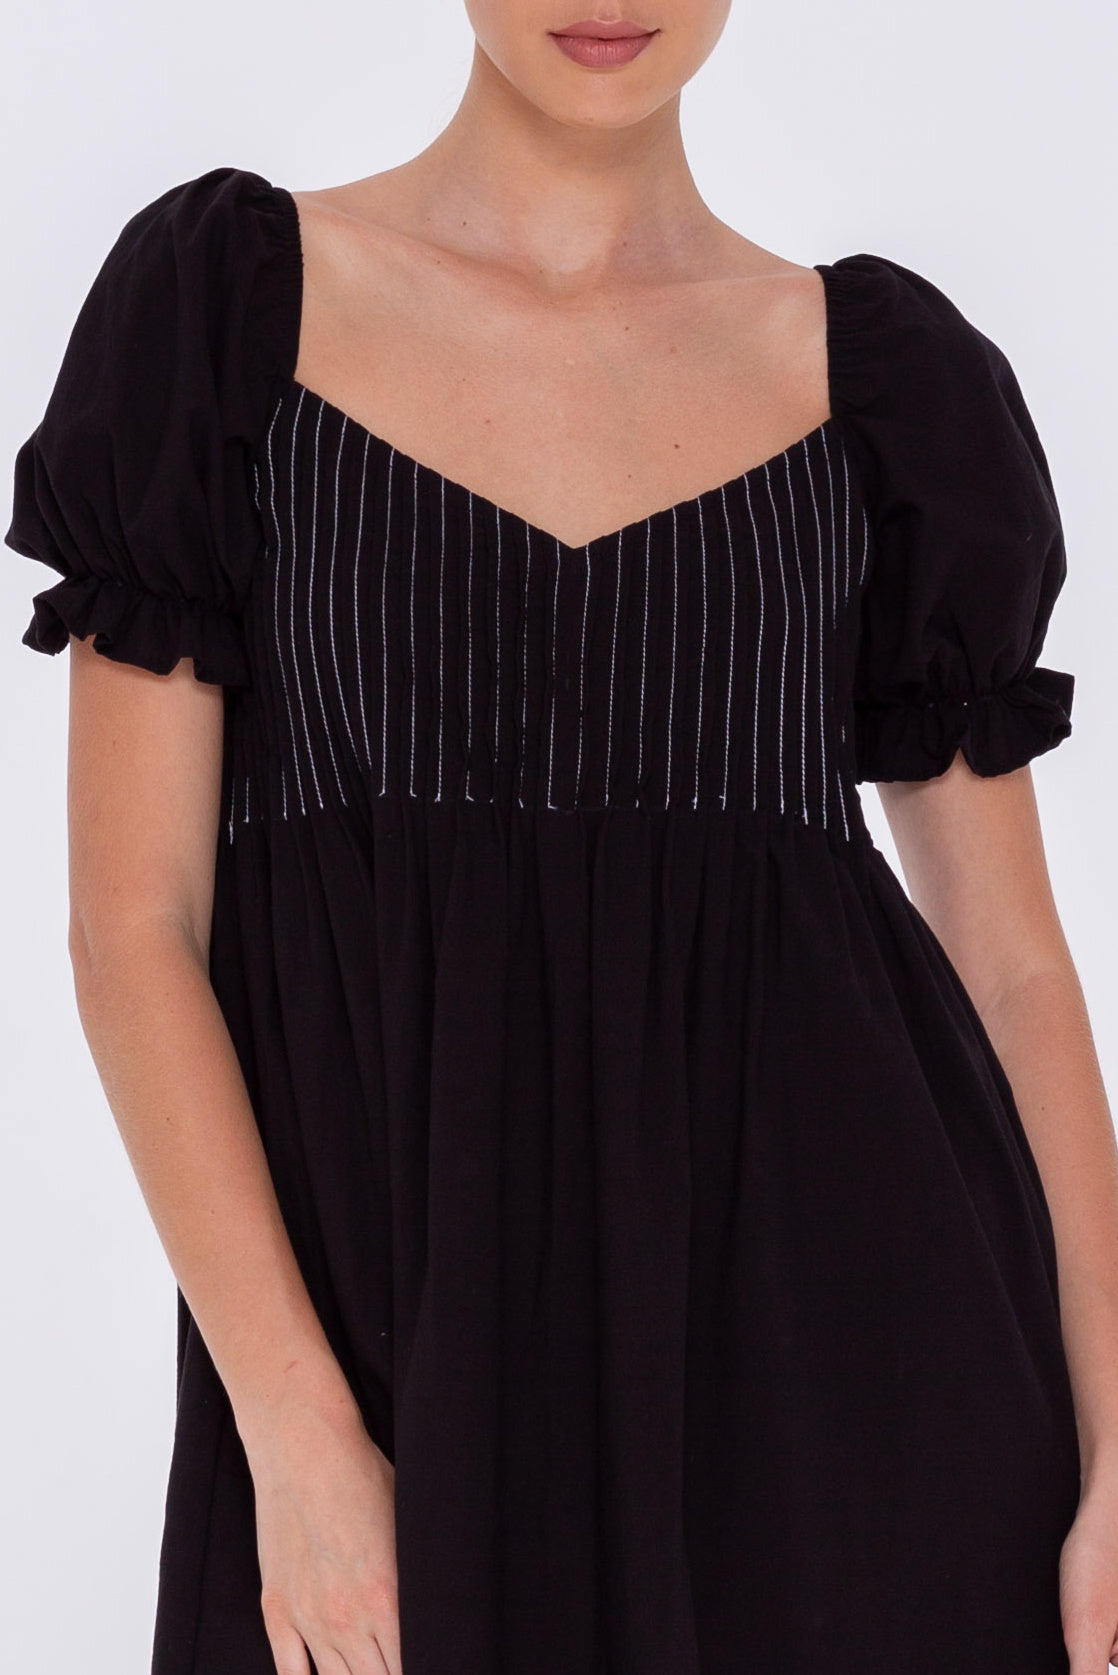 New Love Dress - Black with White Stitching